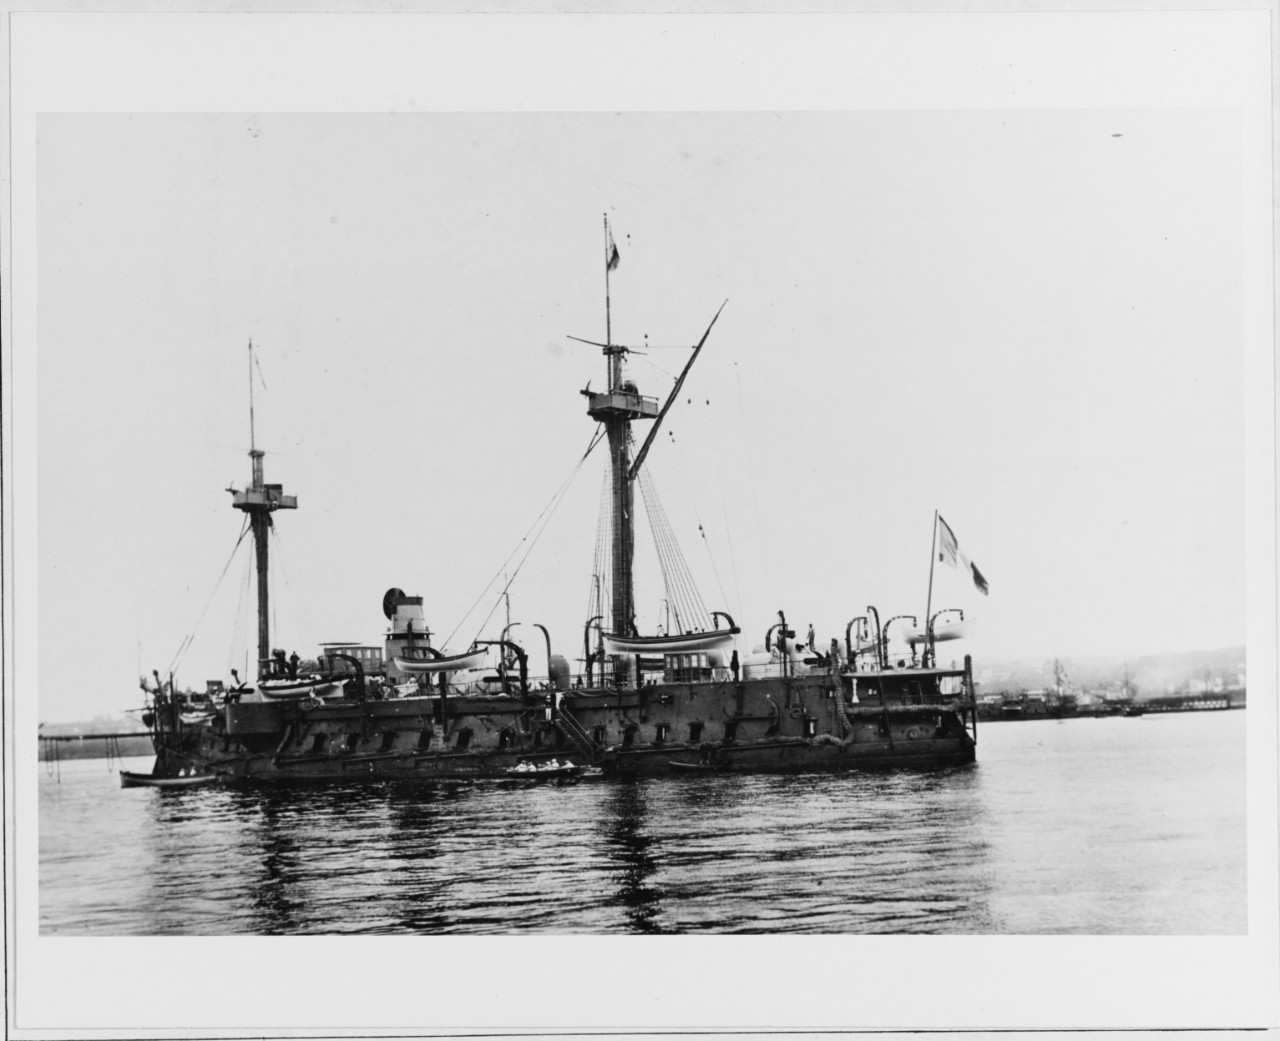 VAUBAN (French armored cruiser, 1882)